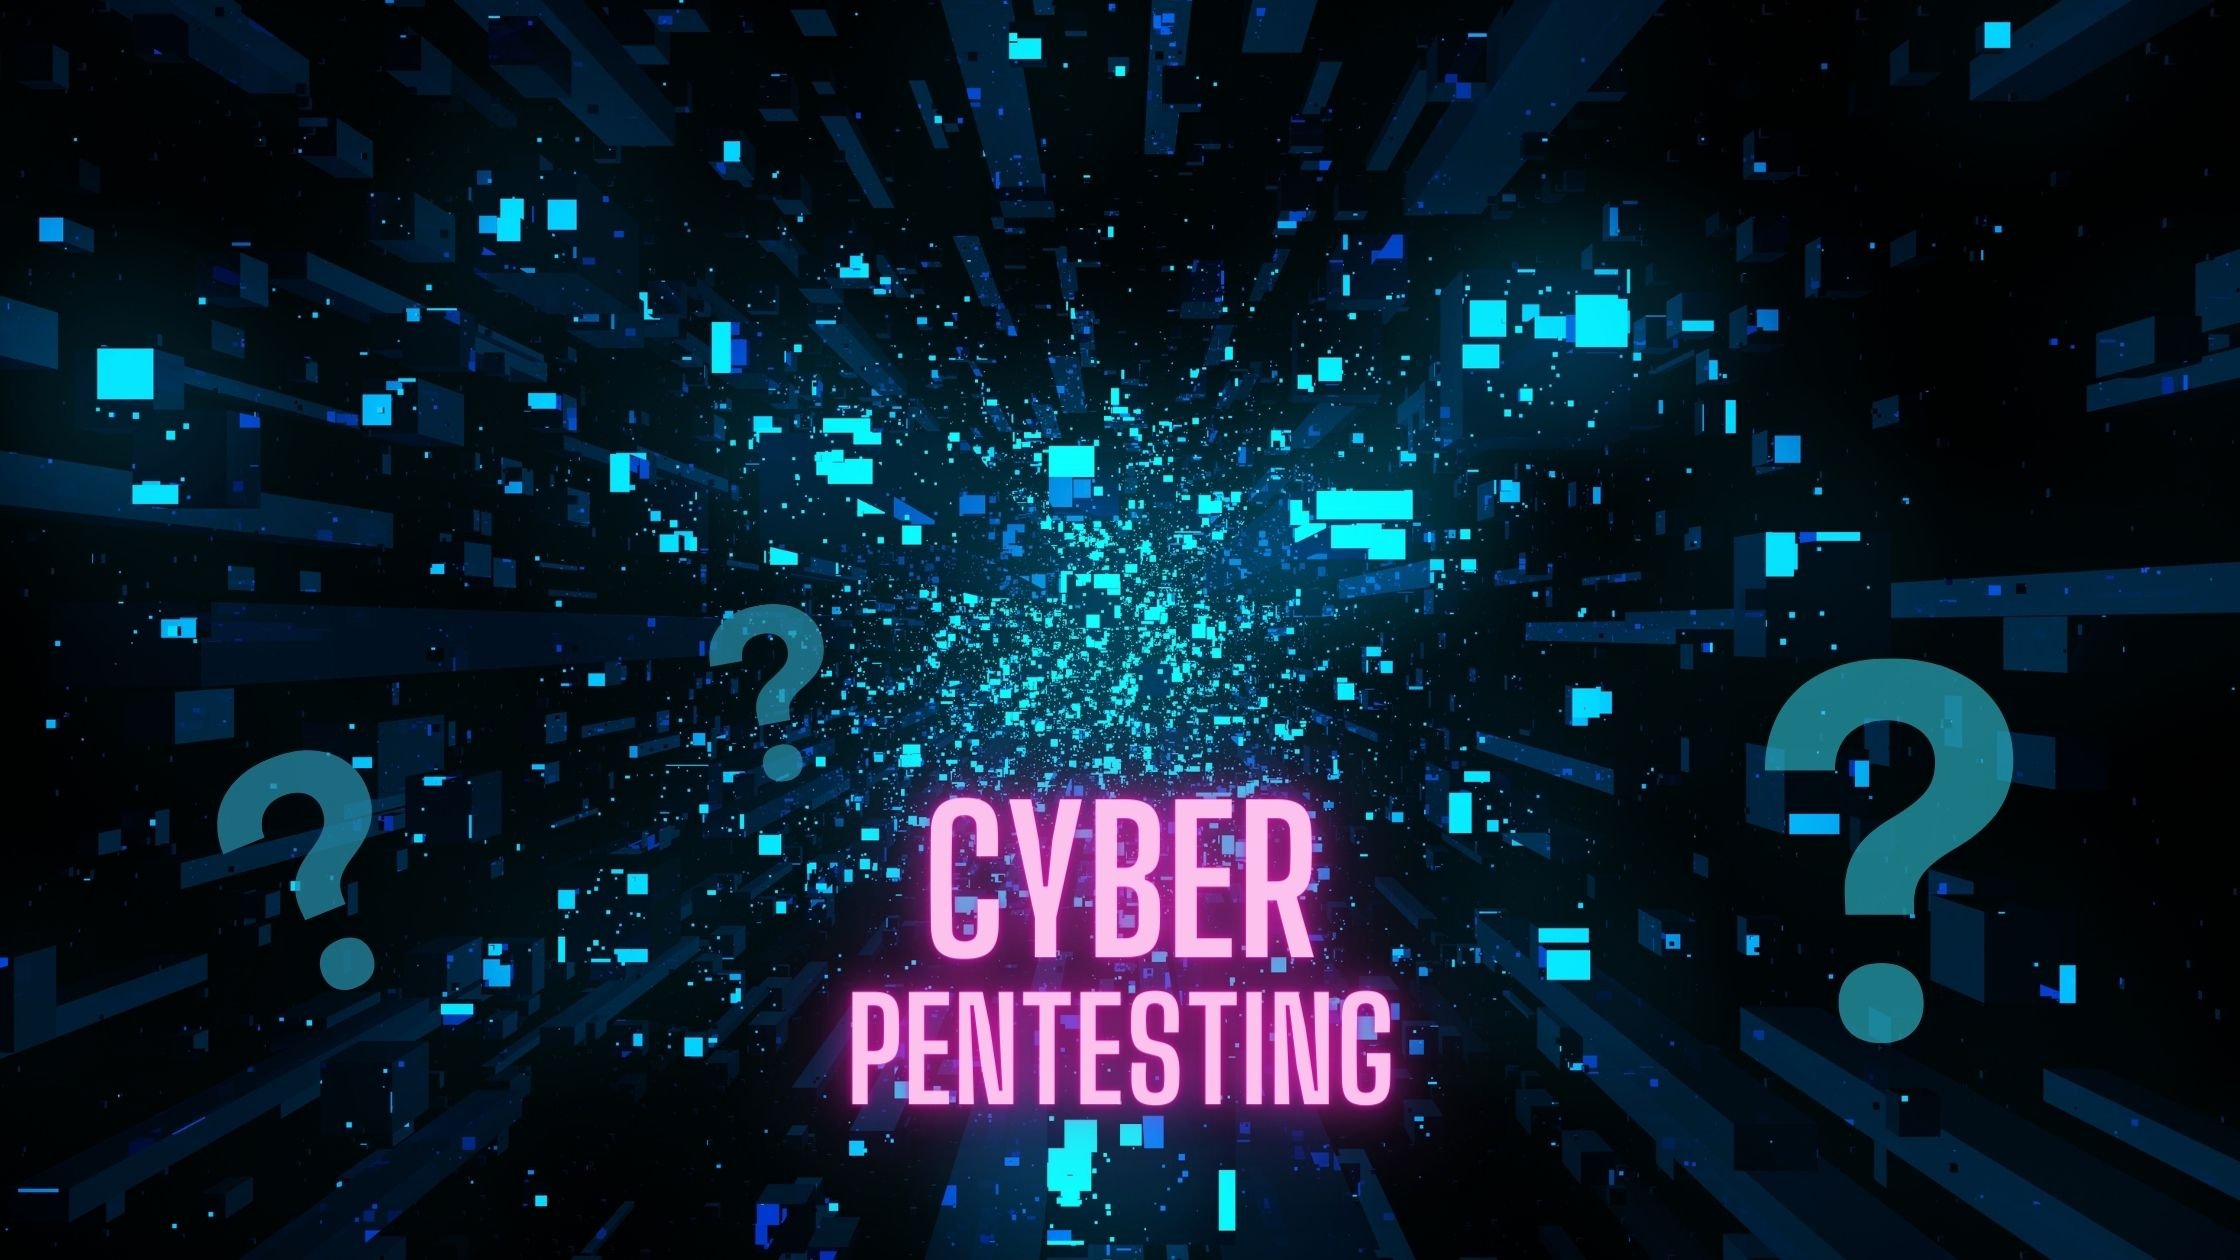 Cyber Pentesting explained